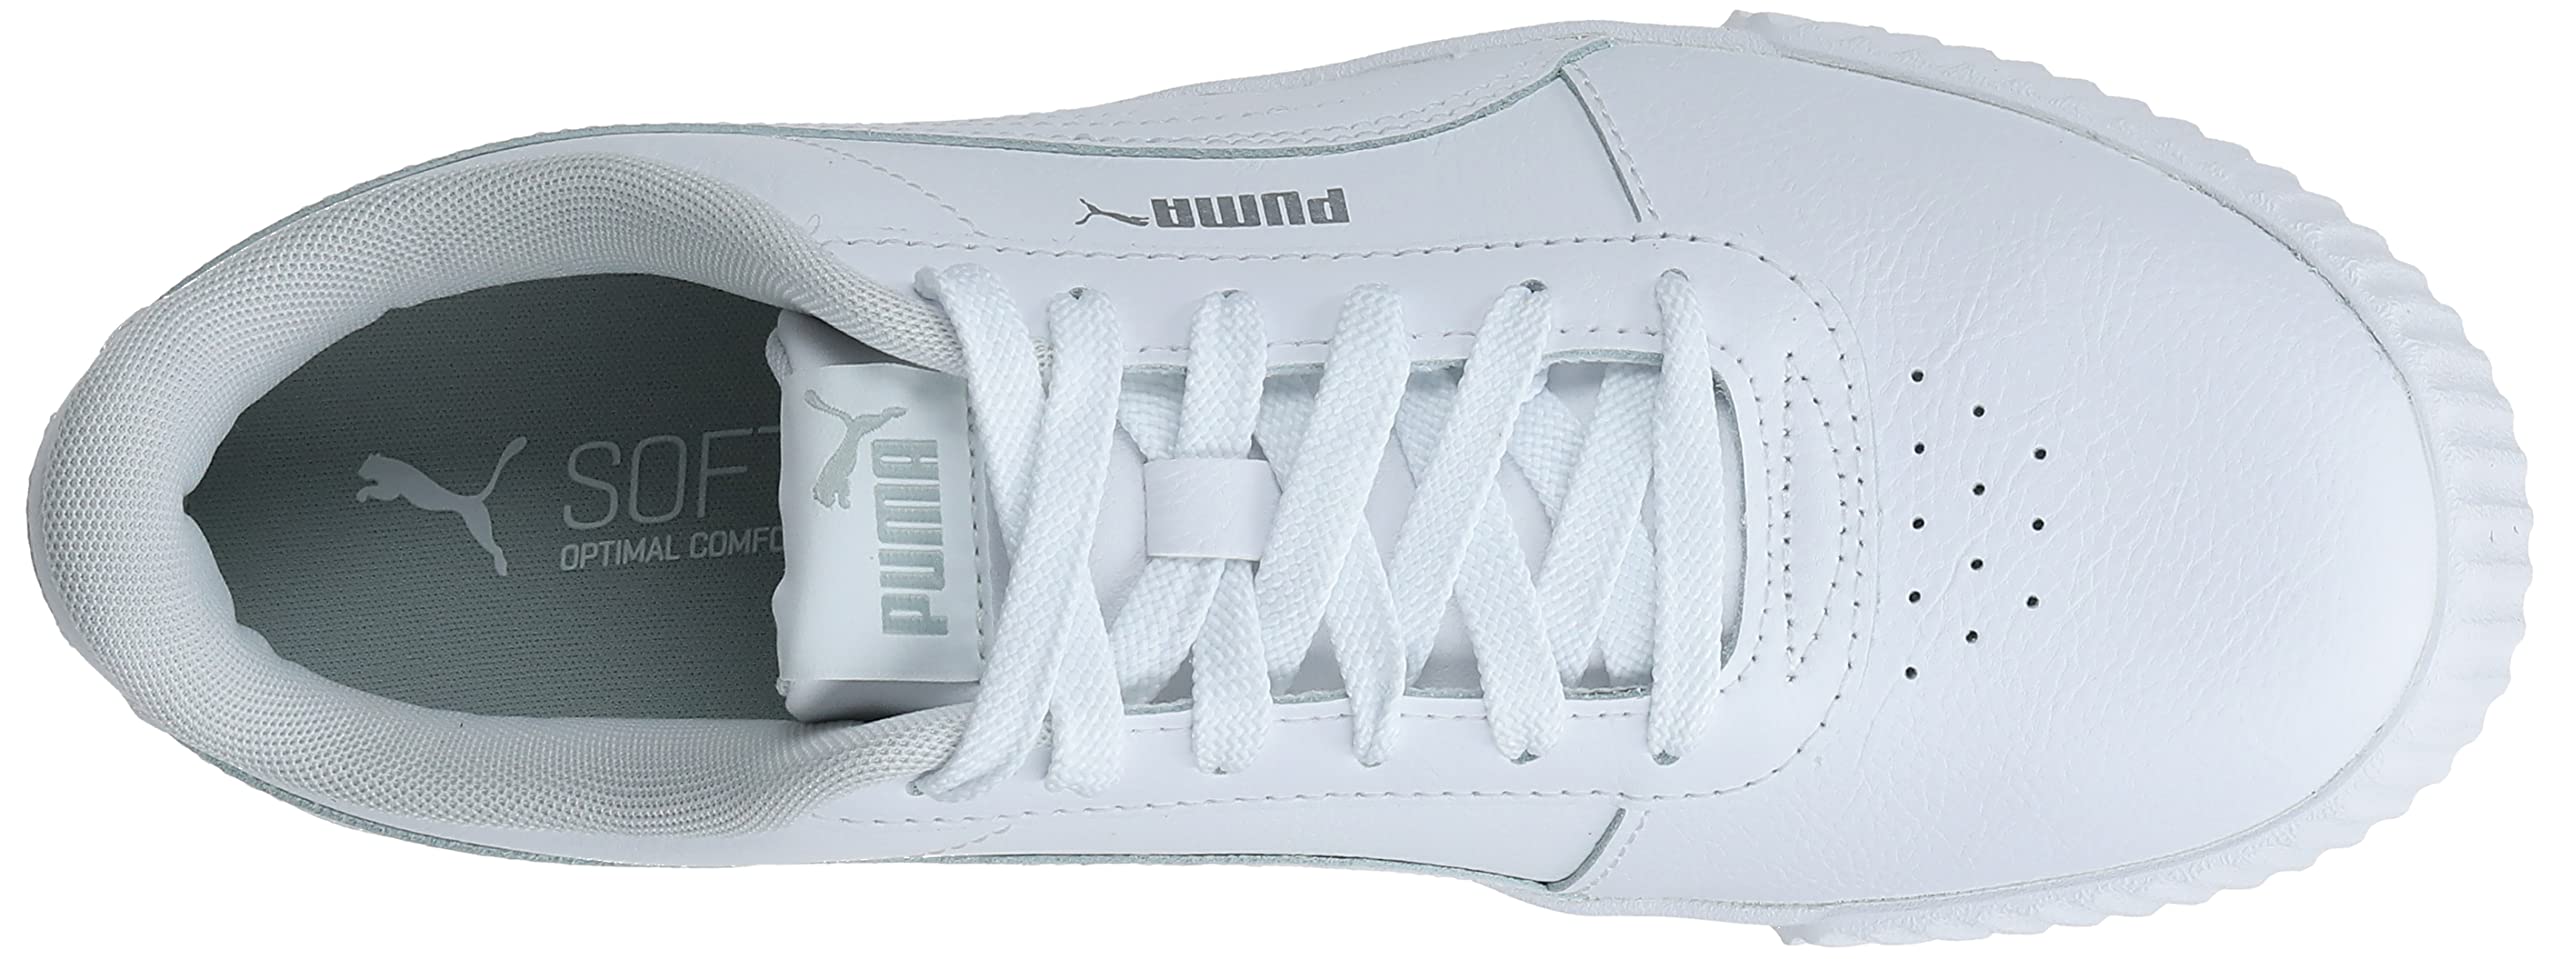 PUMA Women's Carina Sneaker, White White Silver, 7 M US